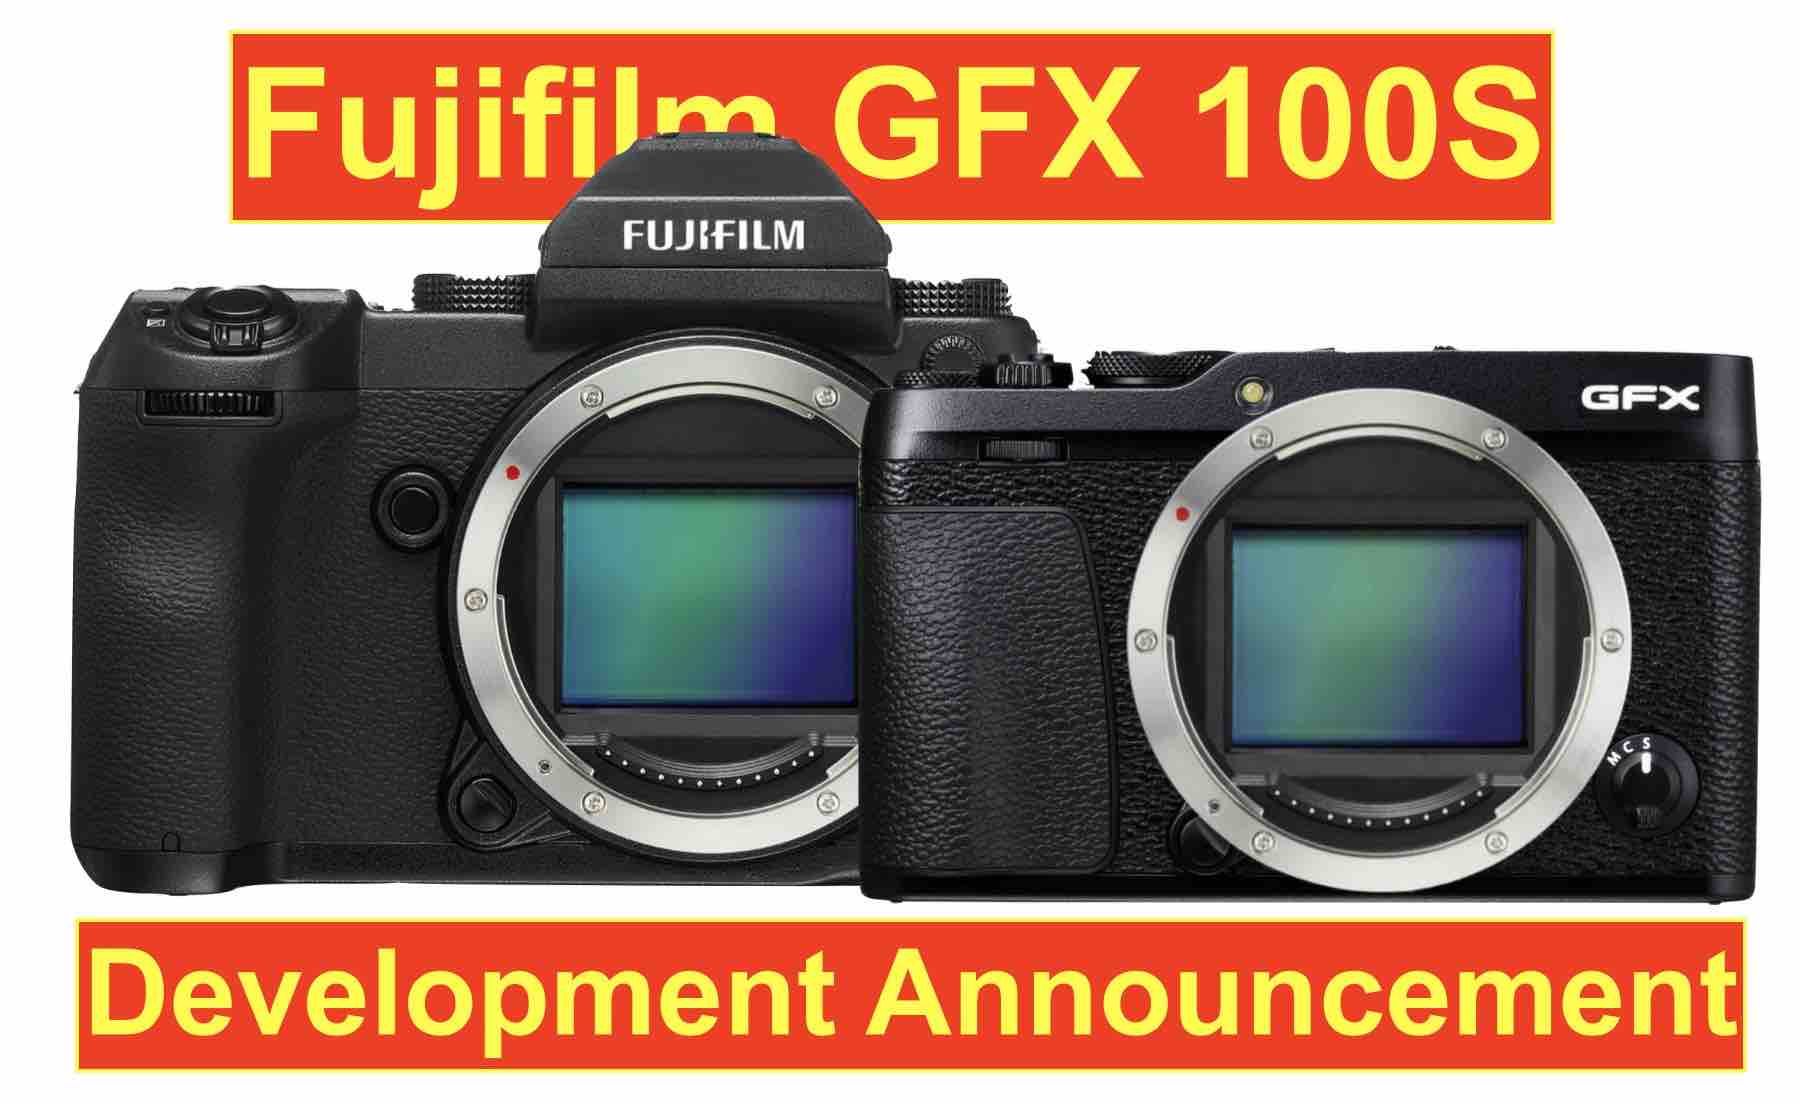 BREAKING: Fujifilm GFX 100S Development Announcement on September 25 at  07:30 AM New York Time - Fuji Rumors